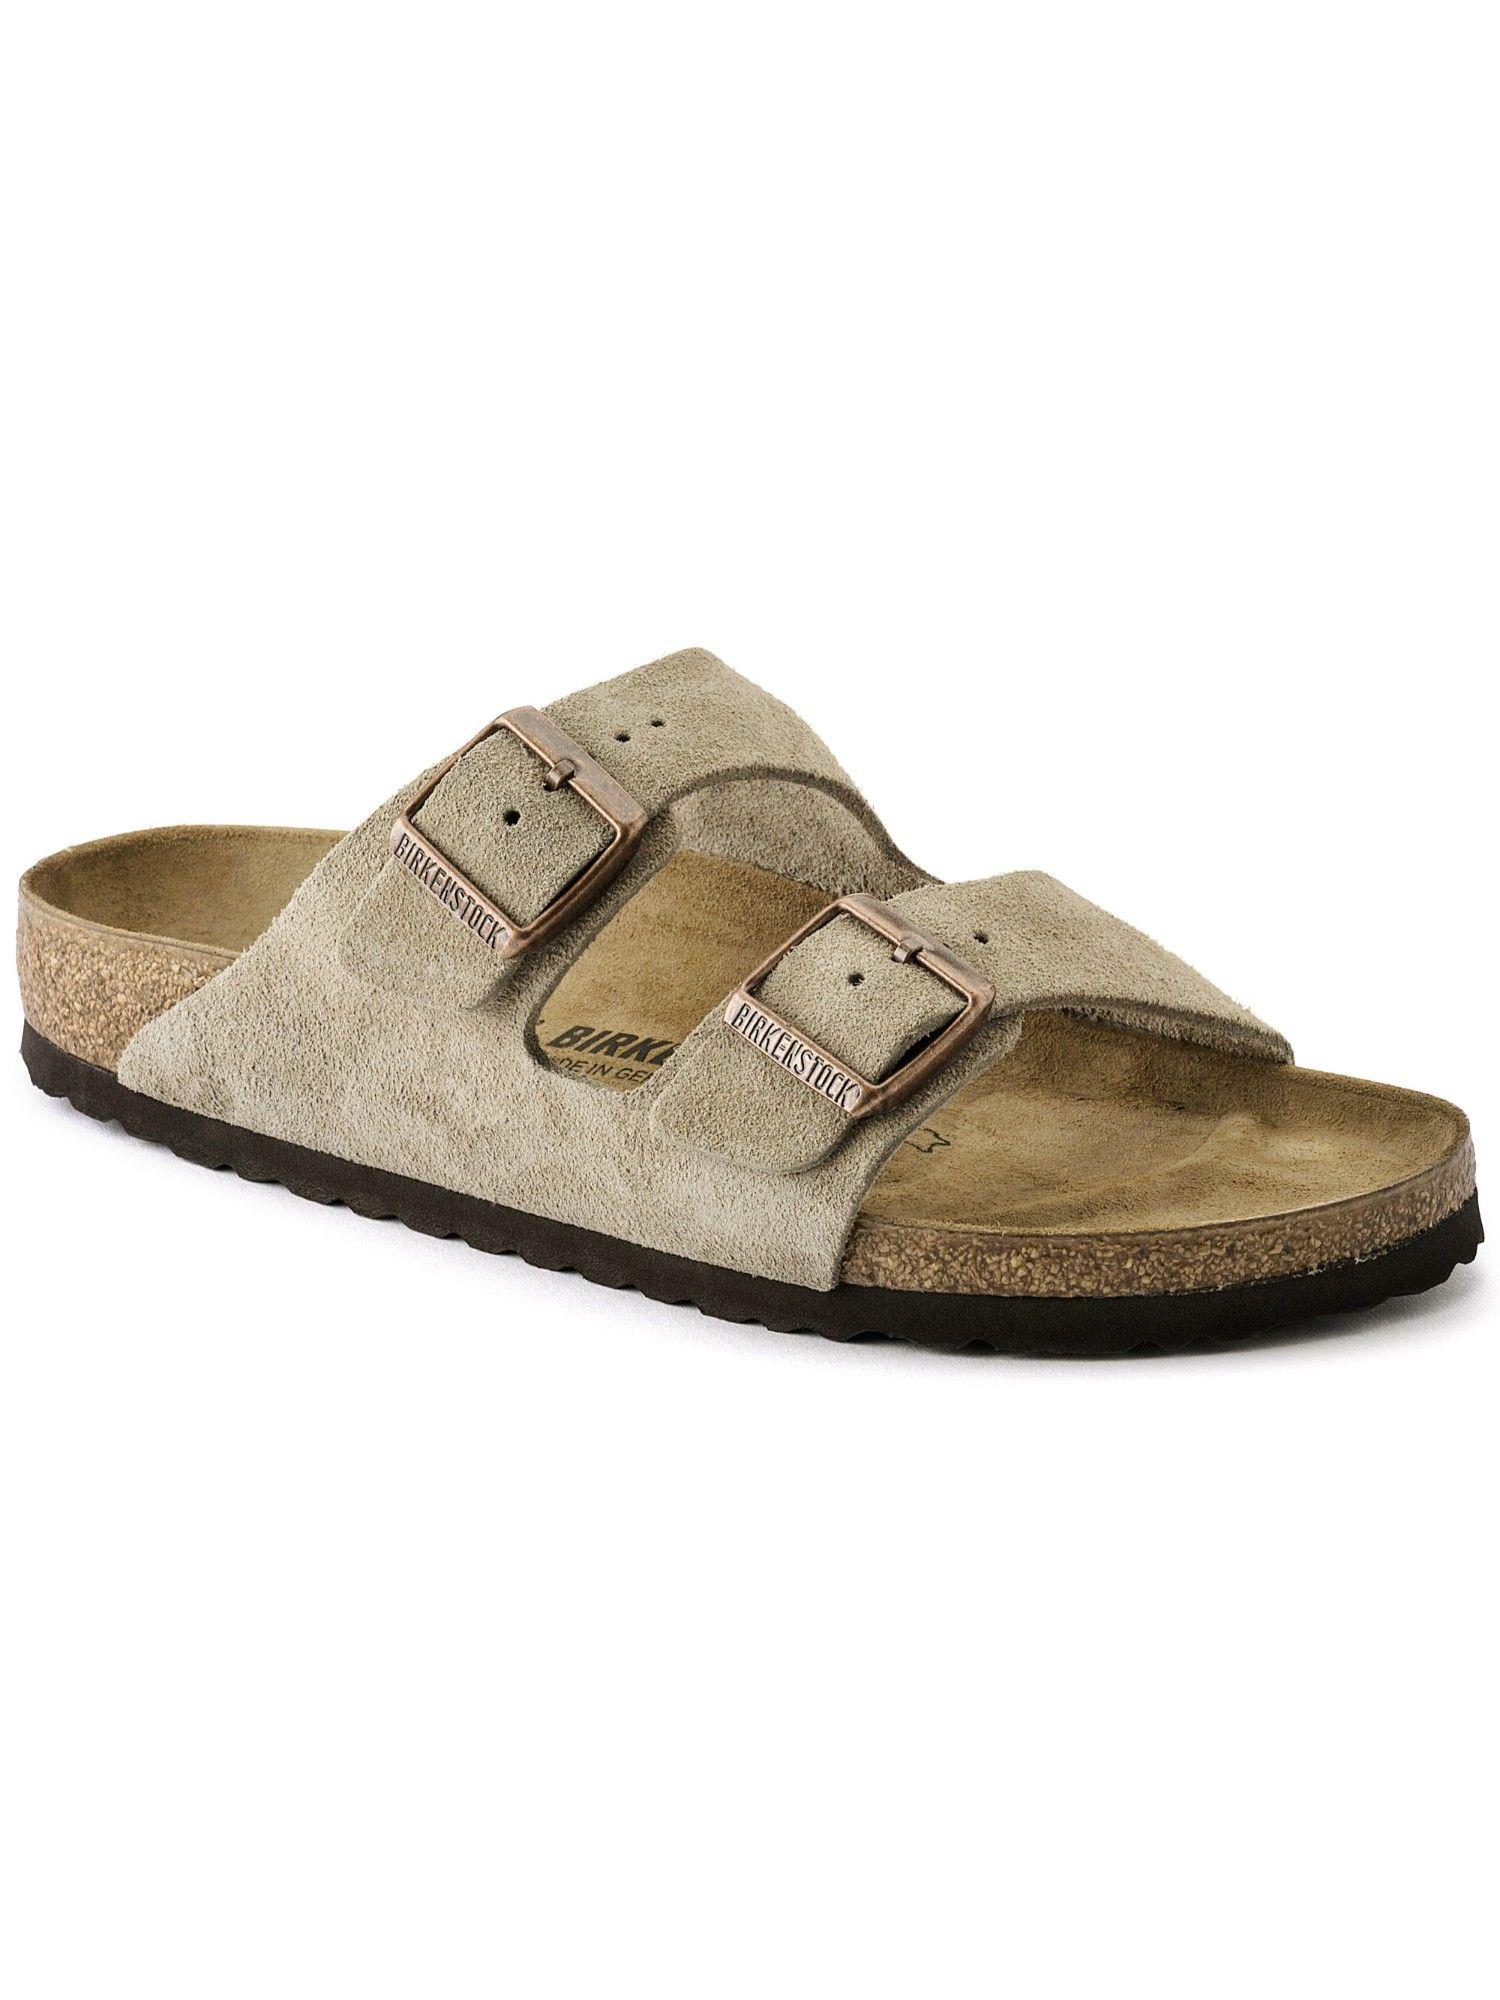 arizona-taupe-regular-width-unisex-two-strap-sandals